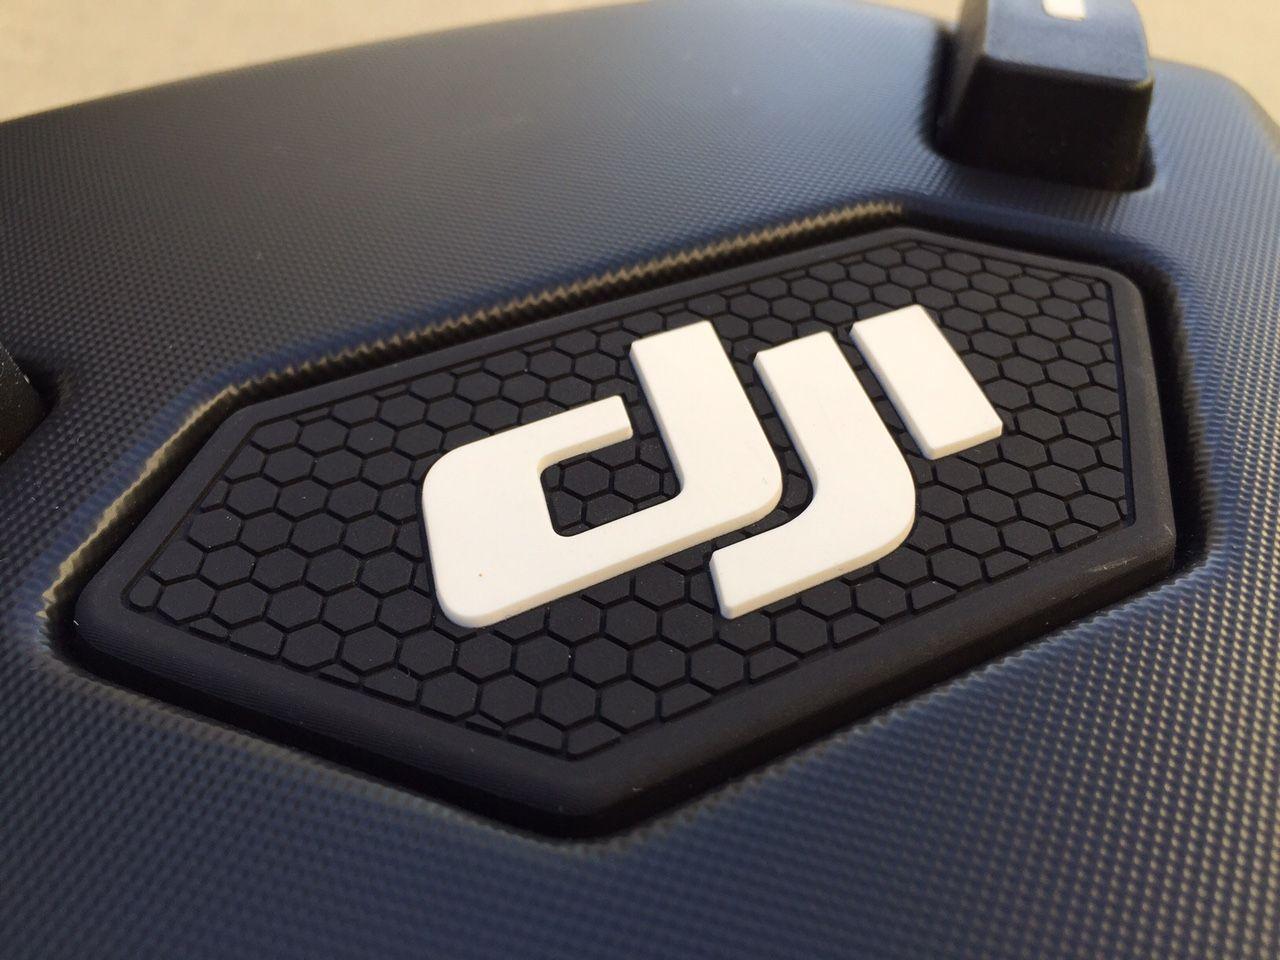 DJI Logo - Hardshell Backpack now has DJI logo | DJI Phantom Drone Forum